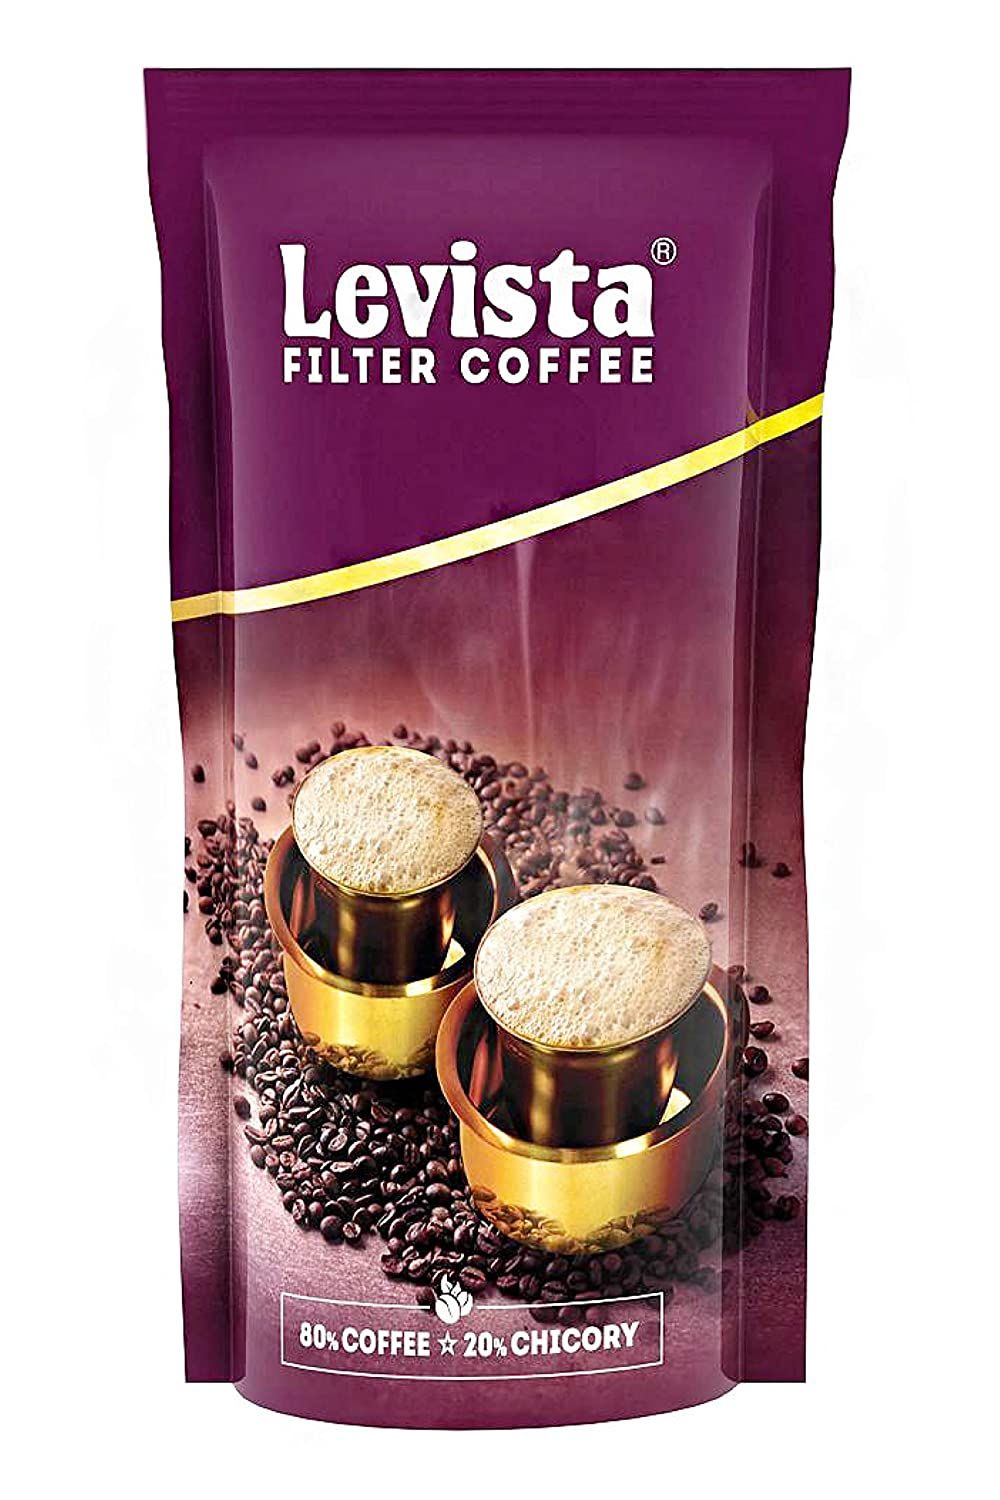 Levista Filter Coffee Image